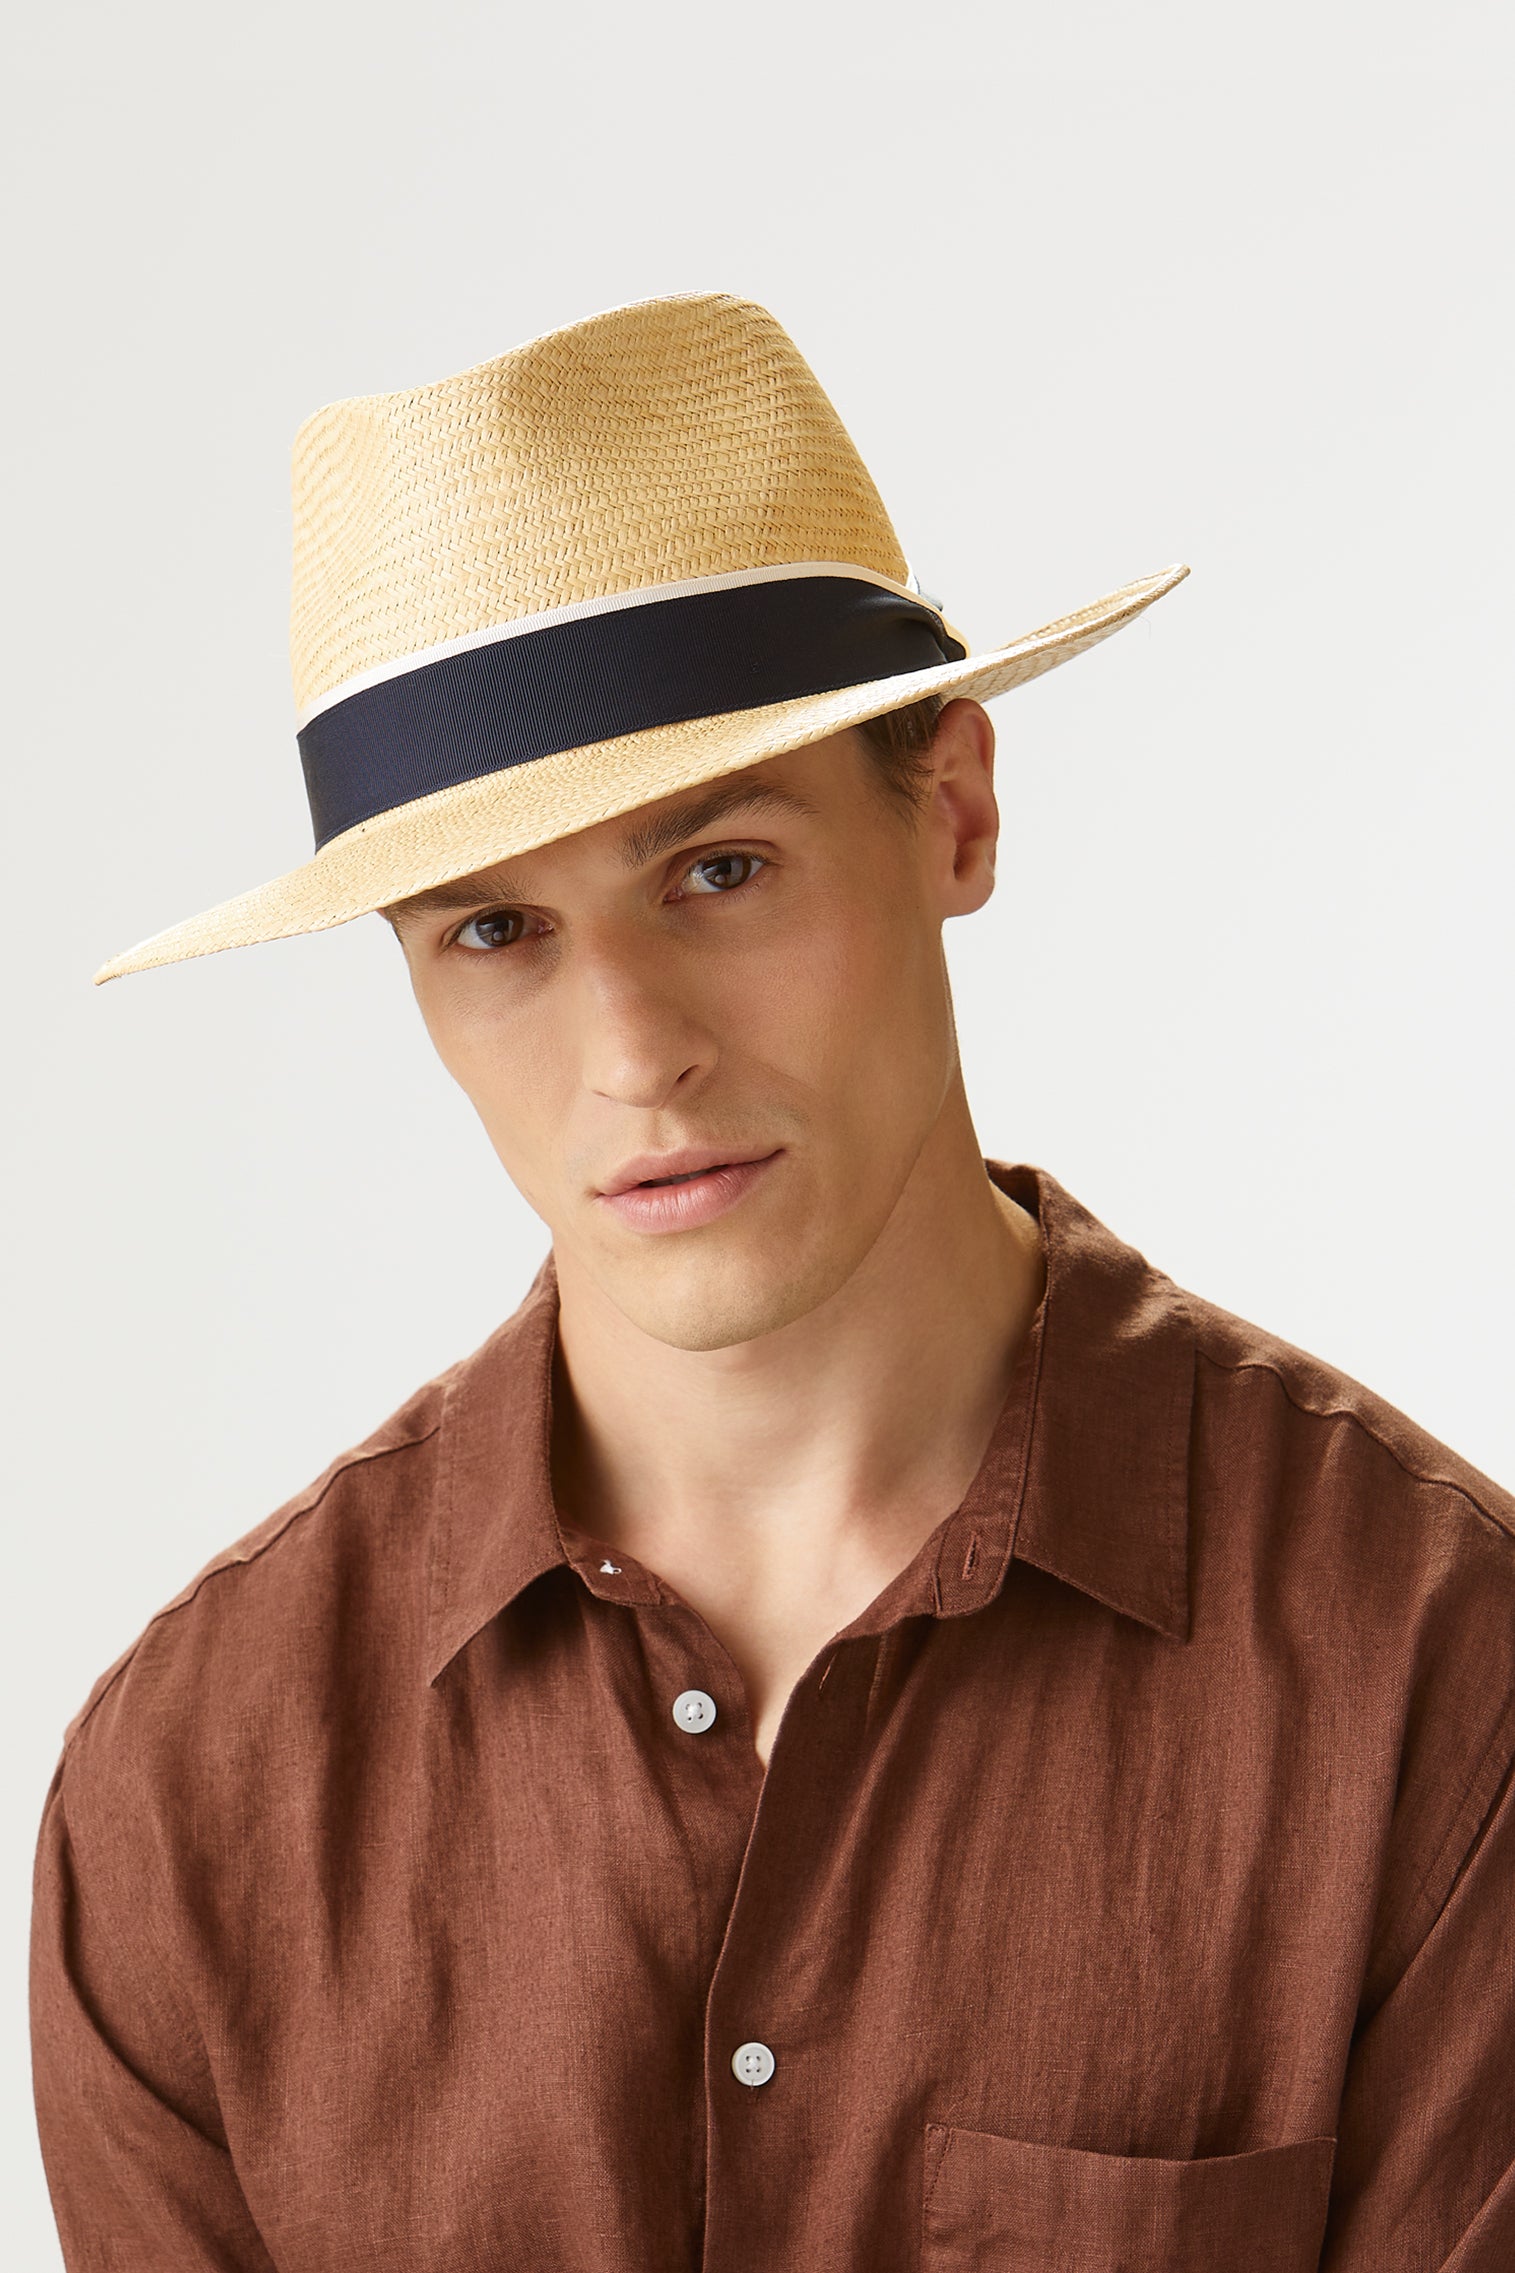 QEST Panama - Panamas, Straw and Sun Hats for Men - Lock & Co. Hatters London UK